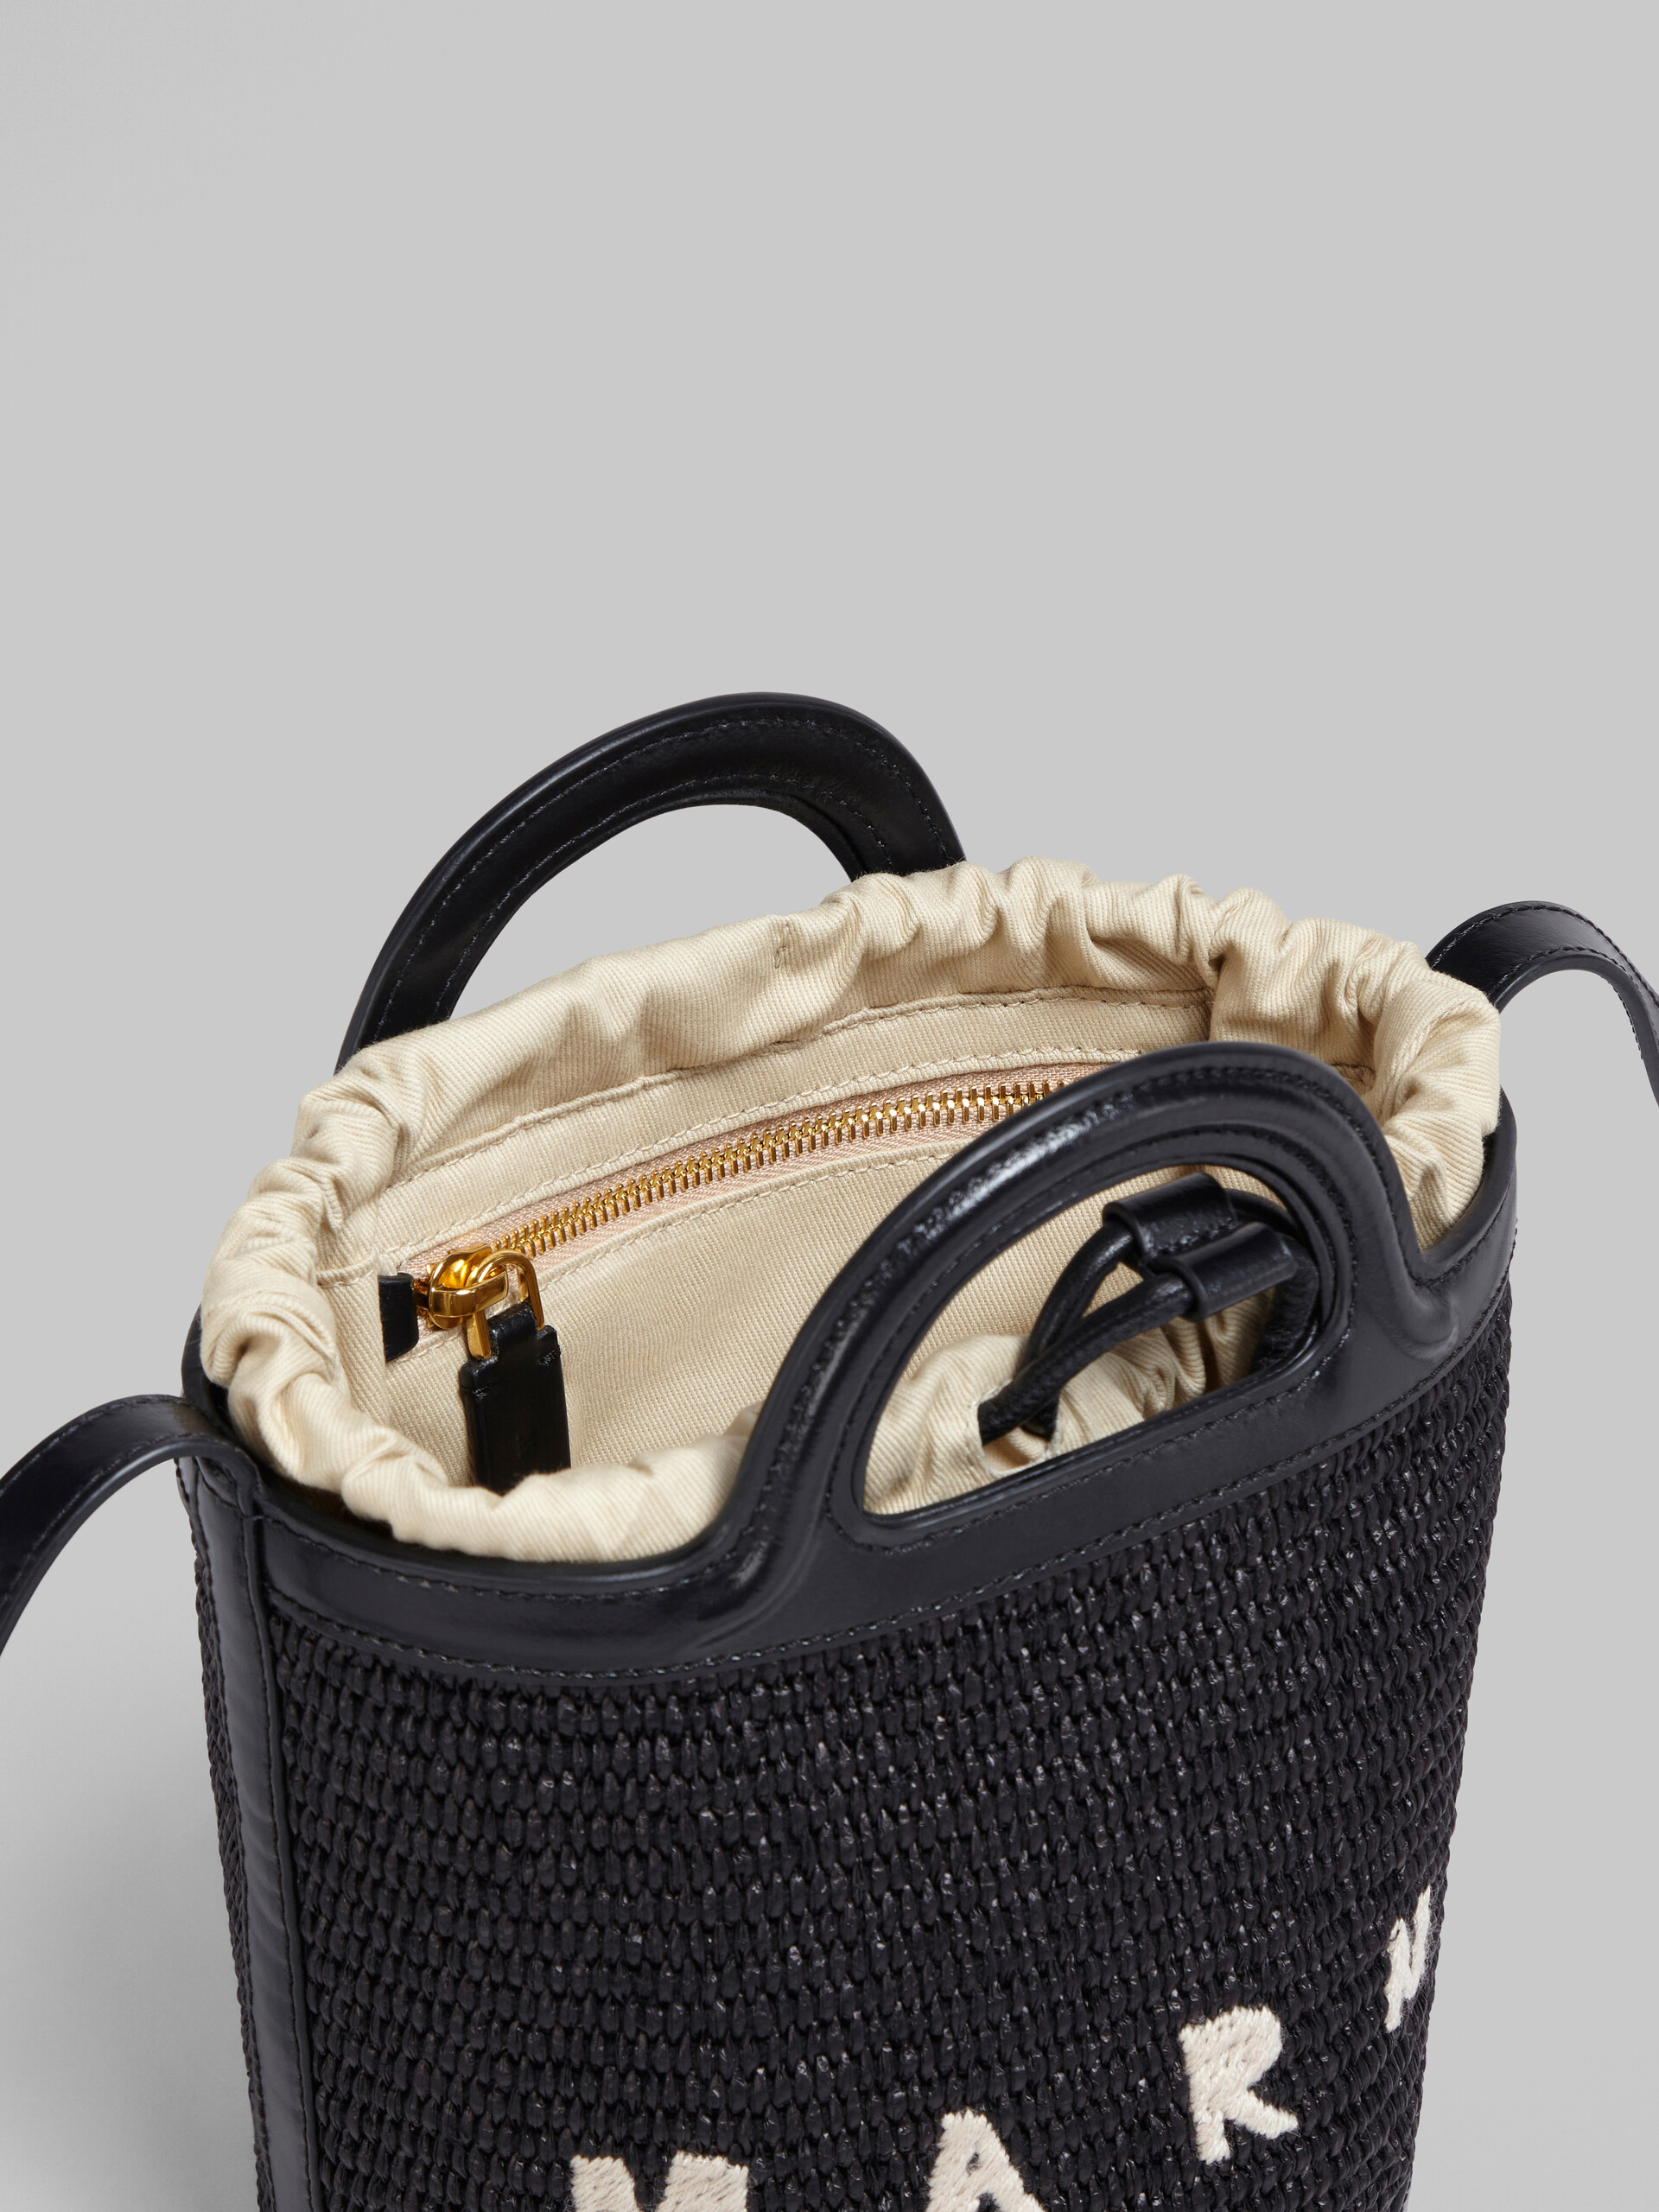 Tropicalia Small Bucket Bag in black leather and raffia - Shoulder Bag - Image 3